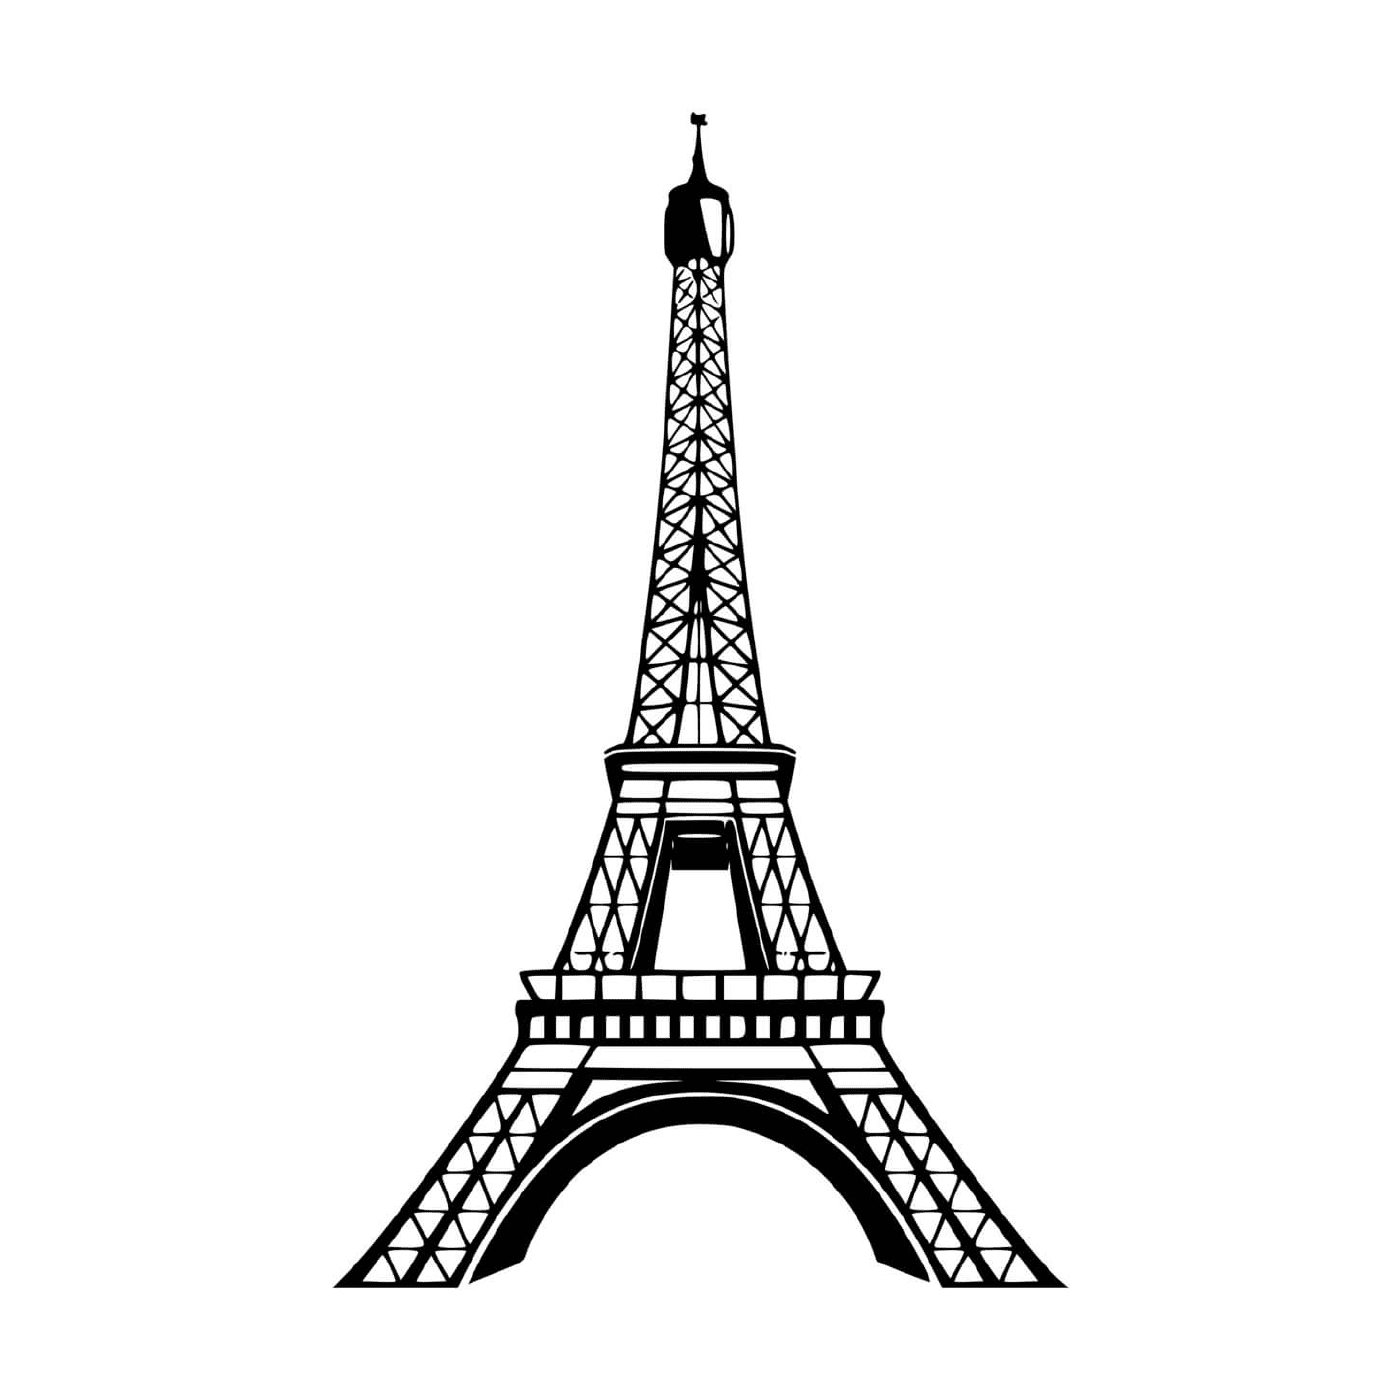  Torre Eiffel emblema oficial de París 